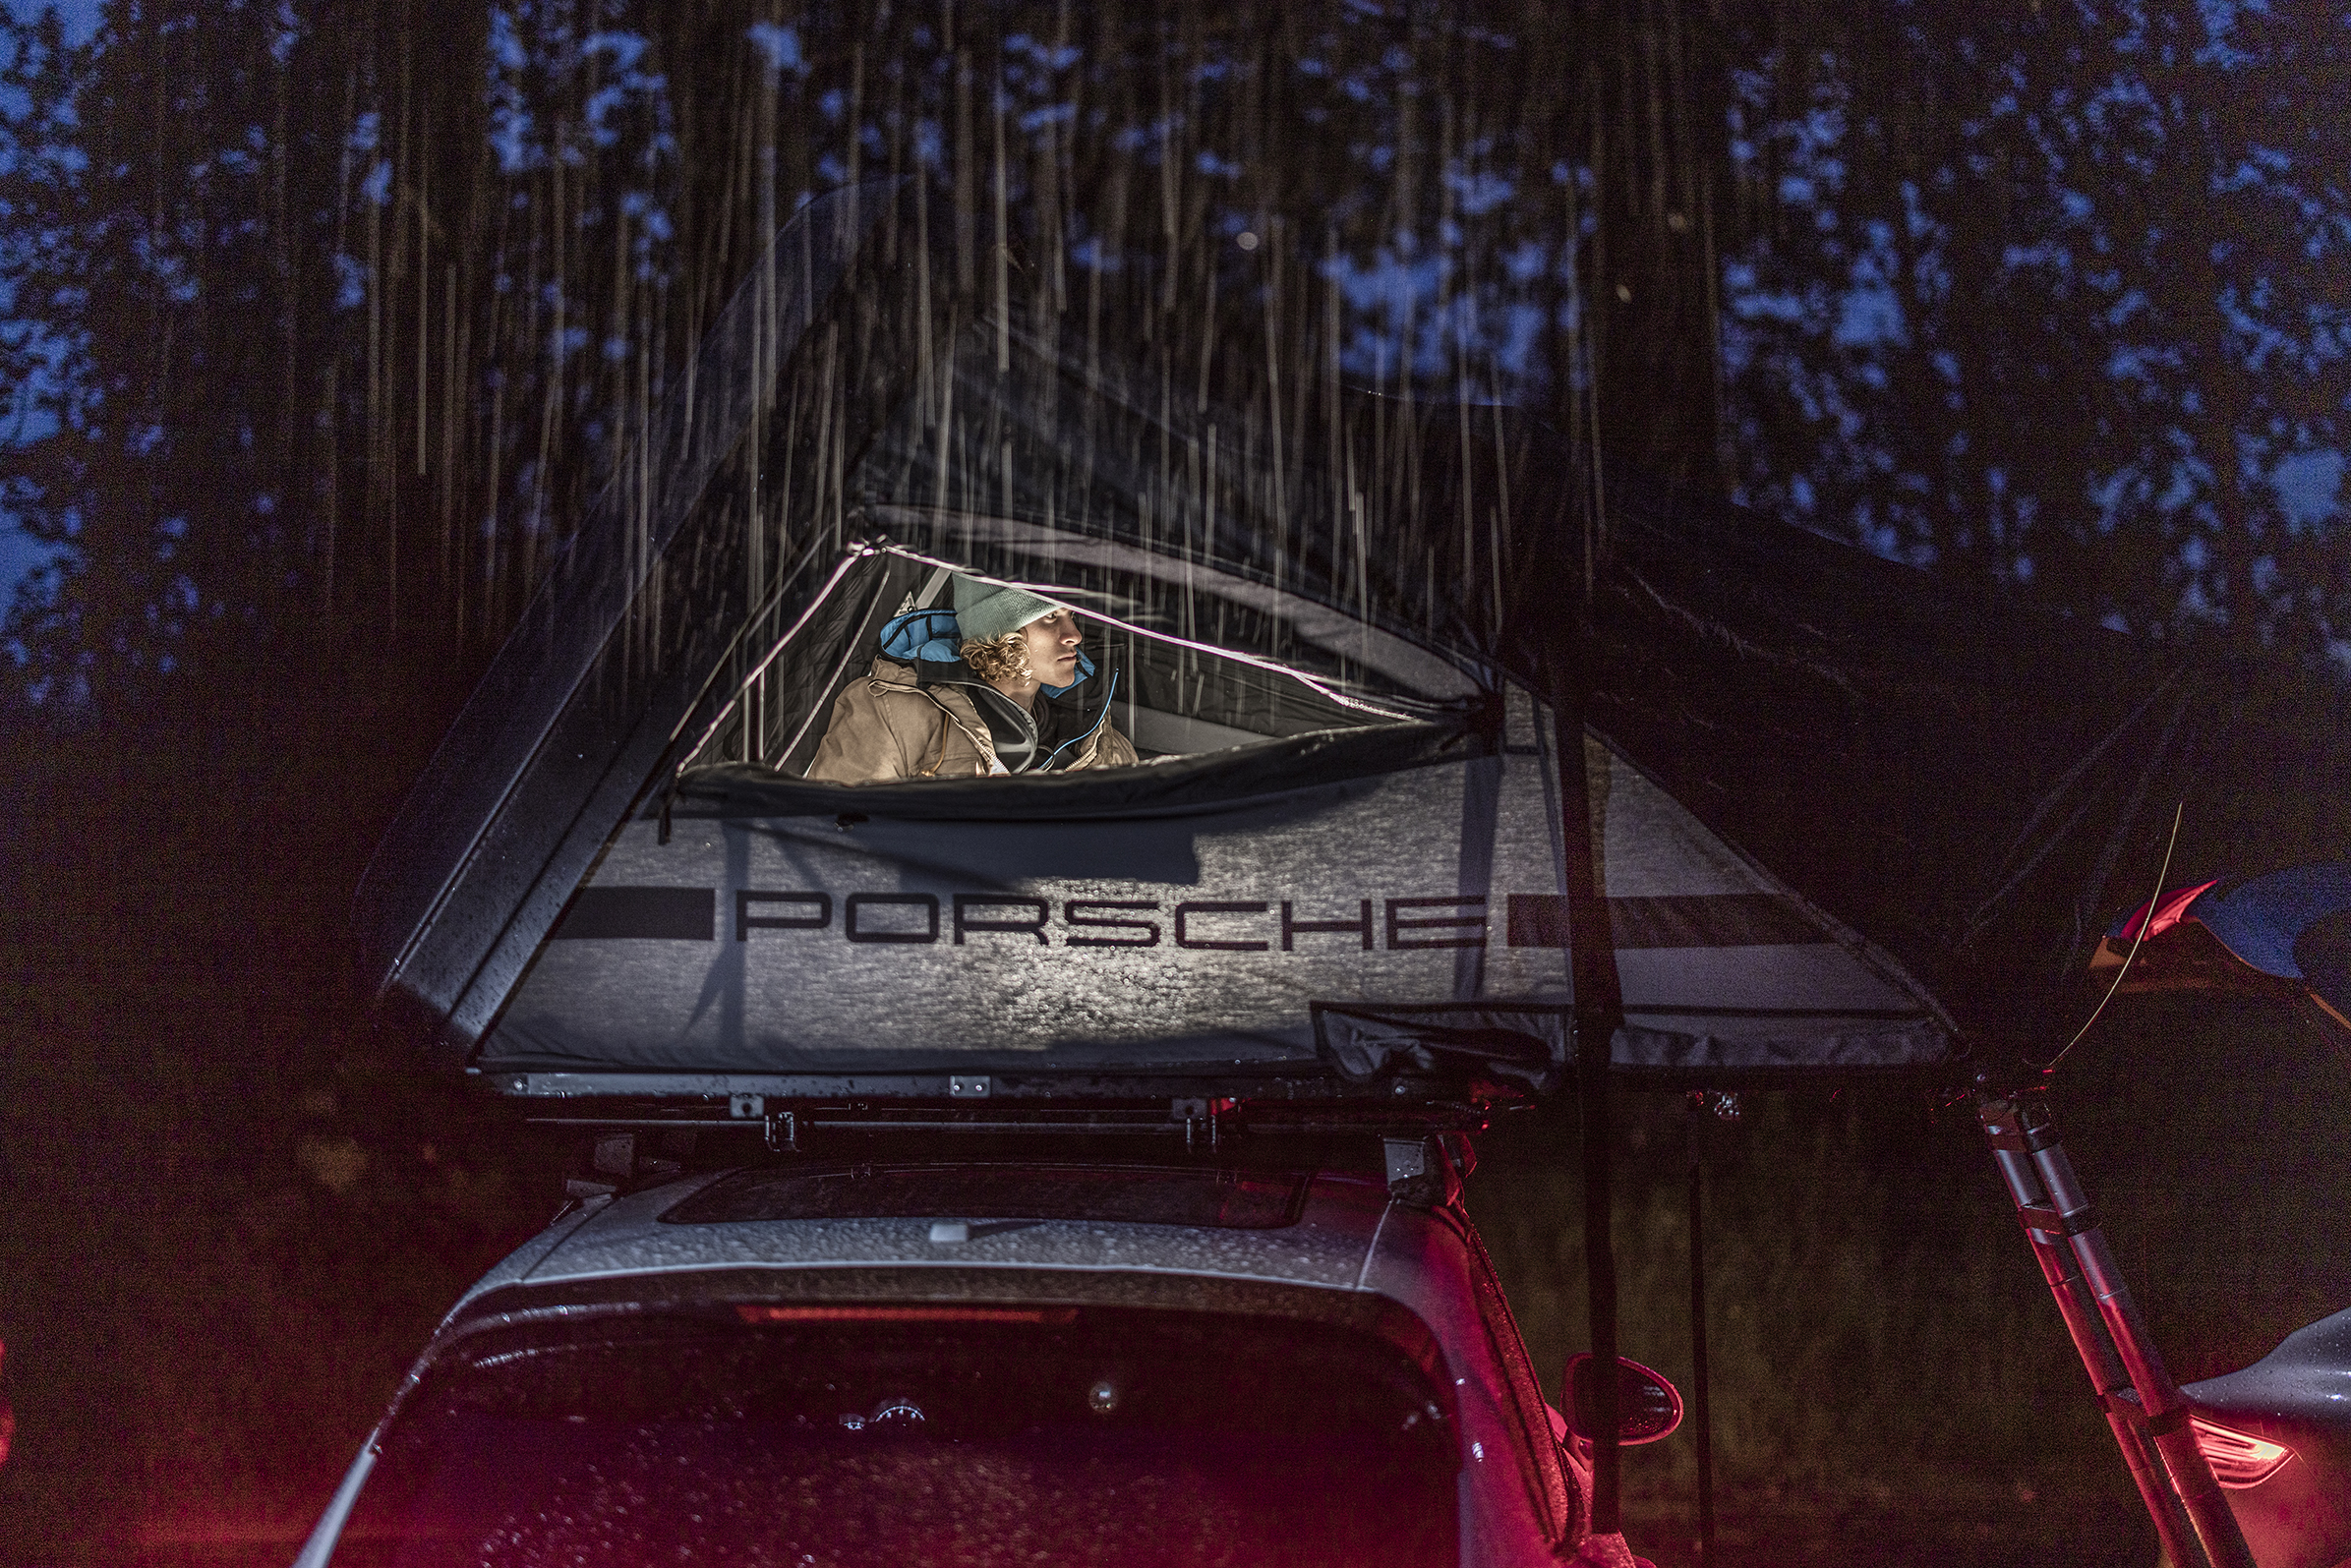 Kitesurfer Liam Whaley sitting in Porsche roof tent